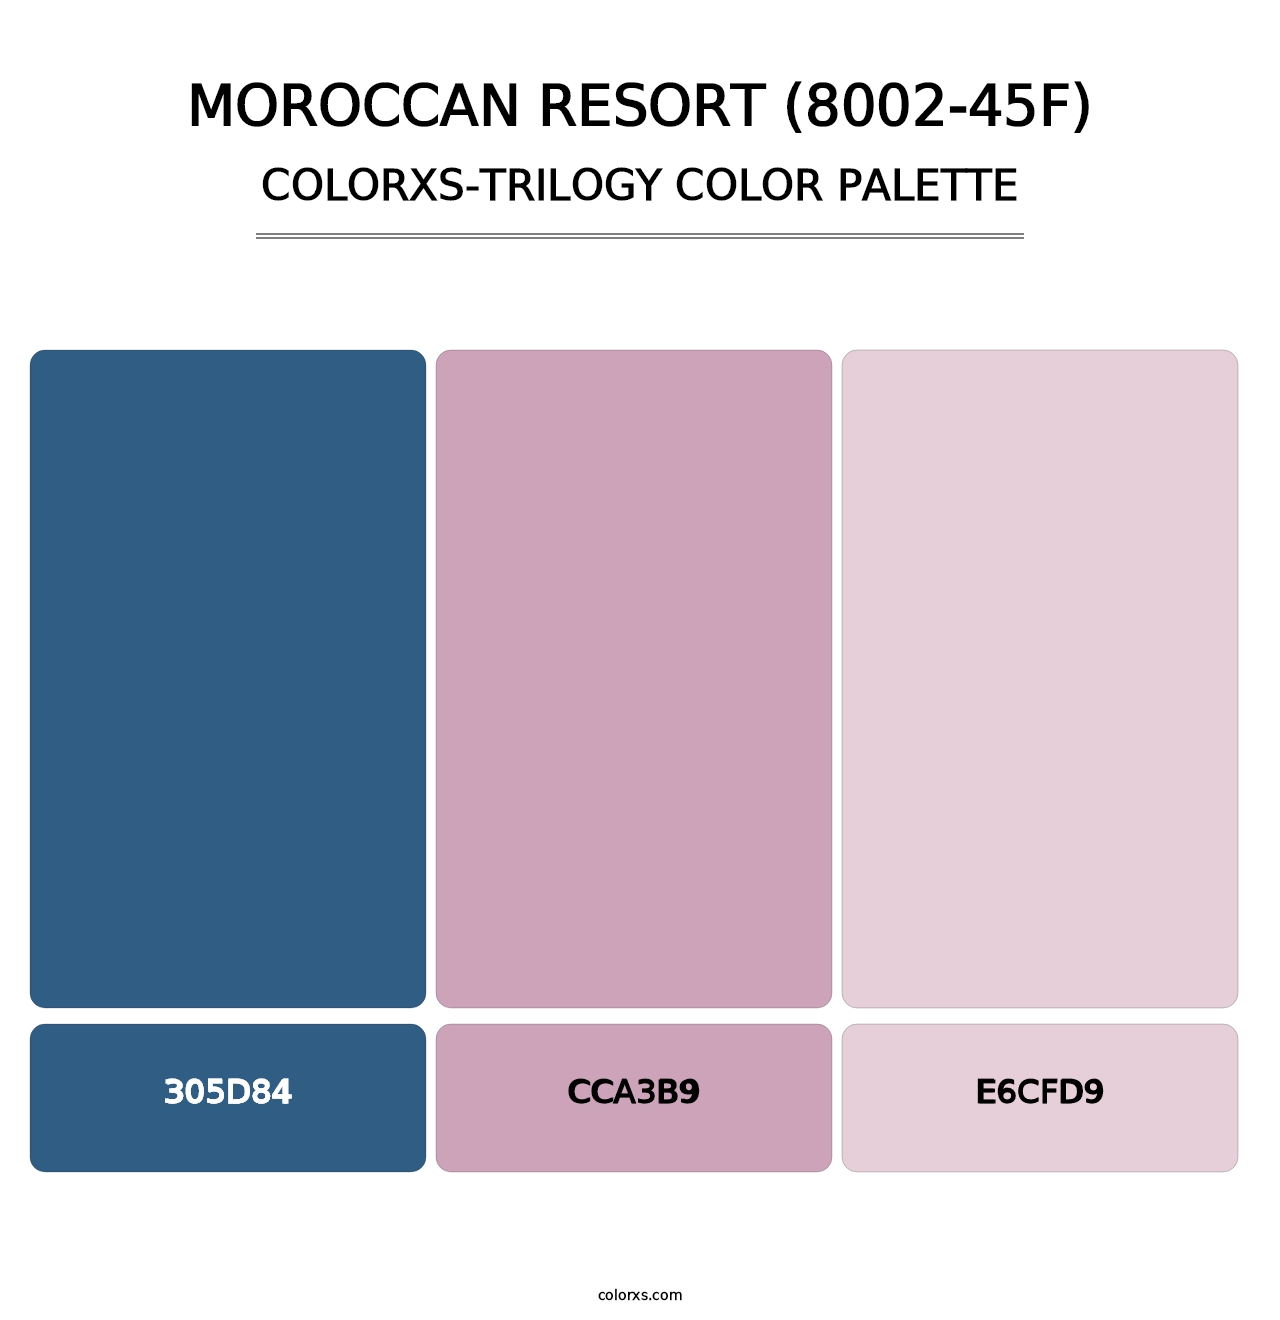 Moroccan Resort (8002-45F) - Colorxs Trilogy Palette